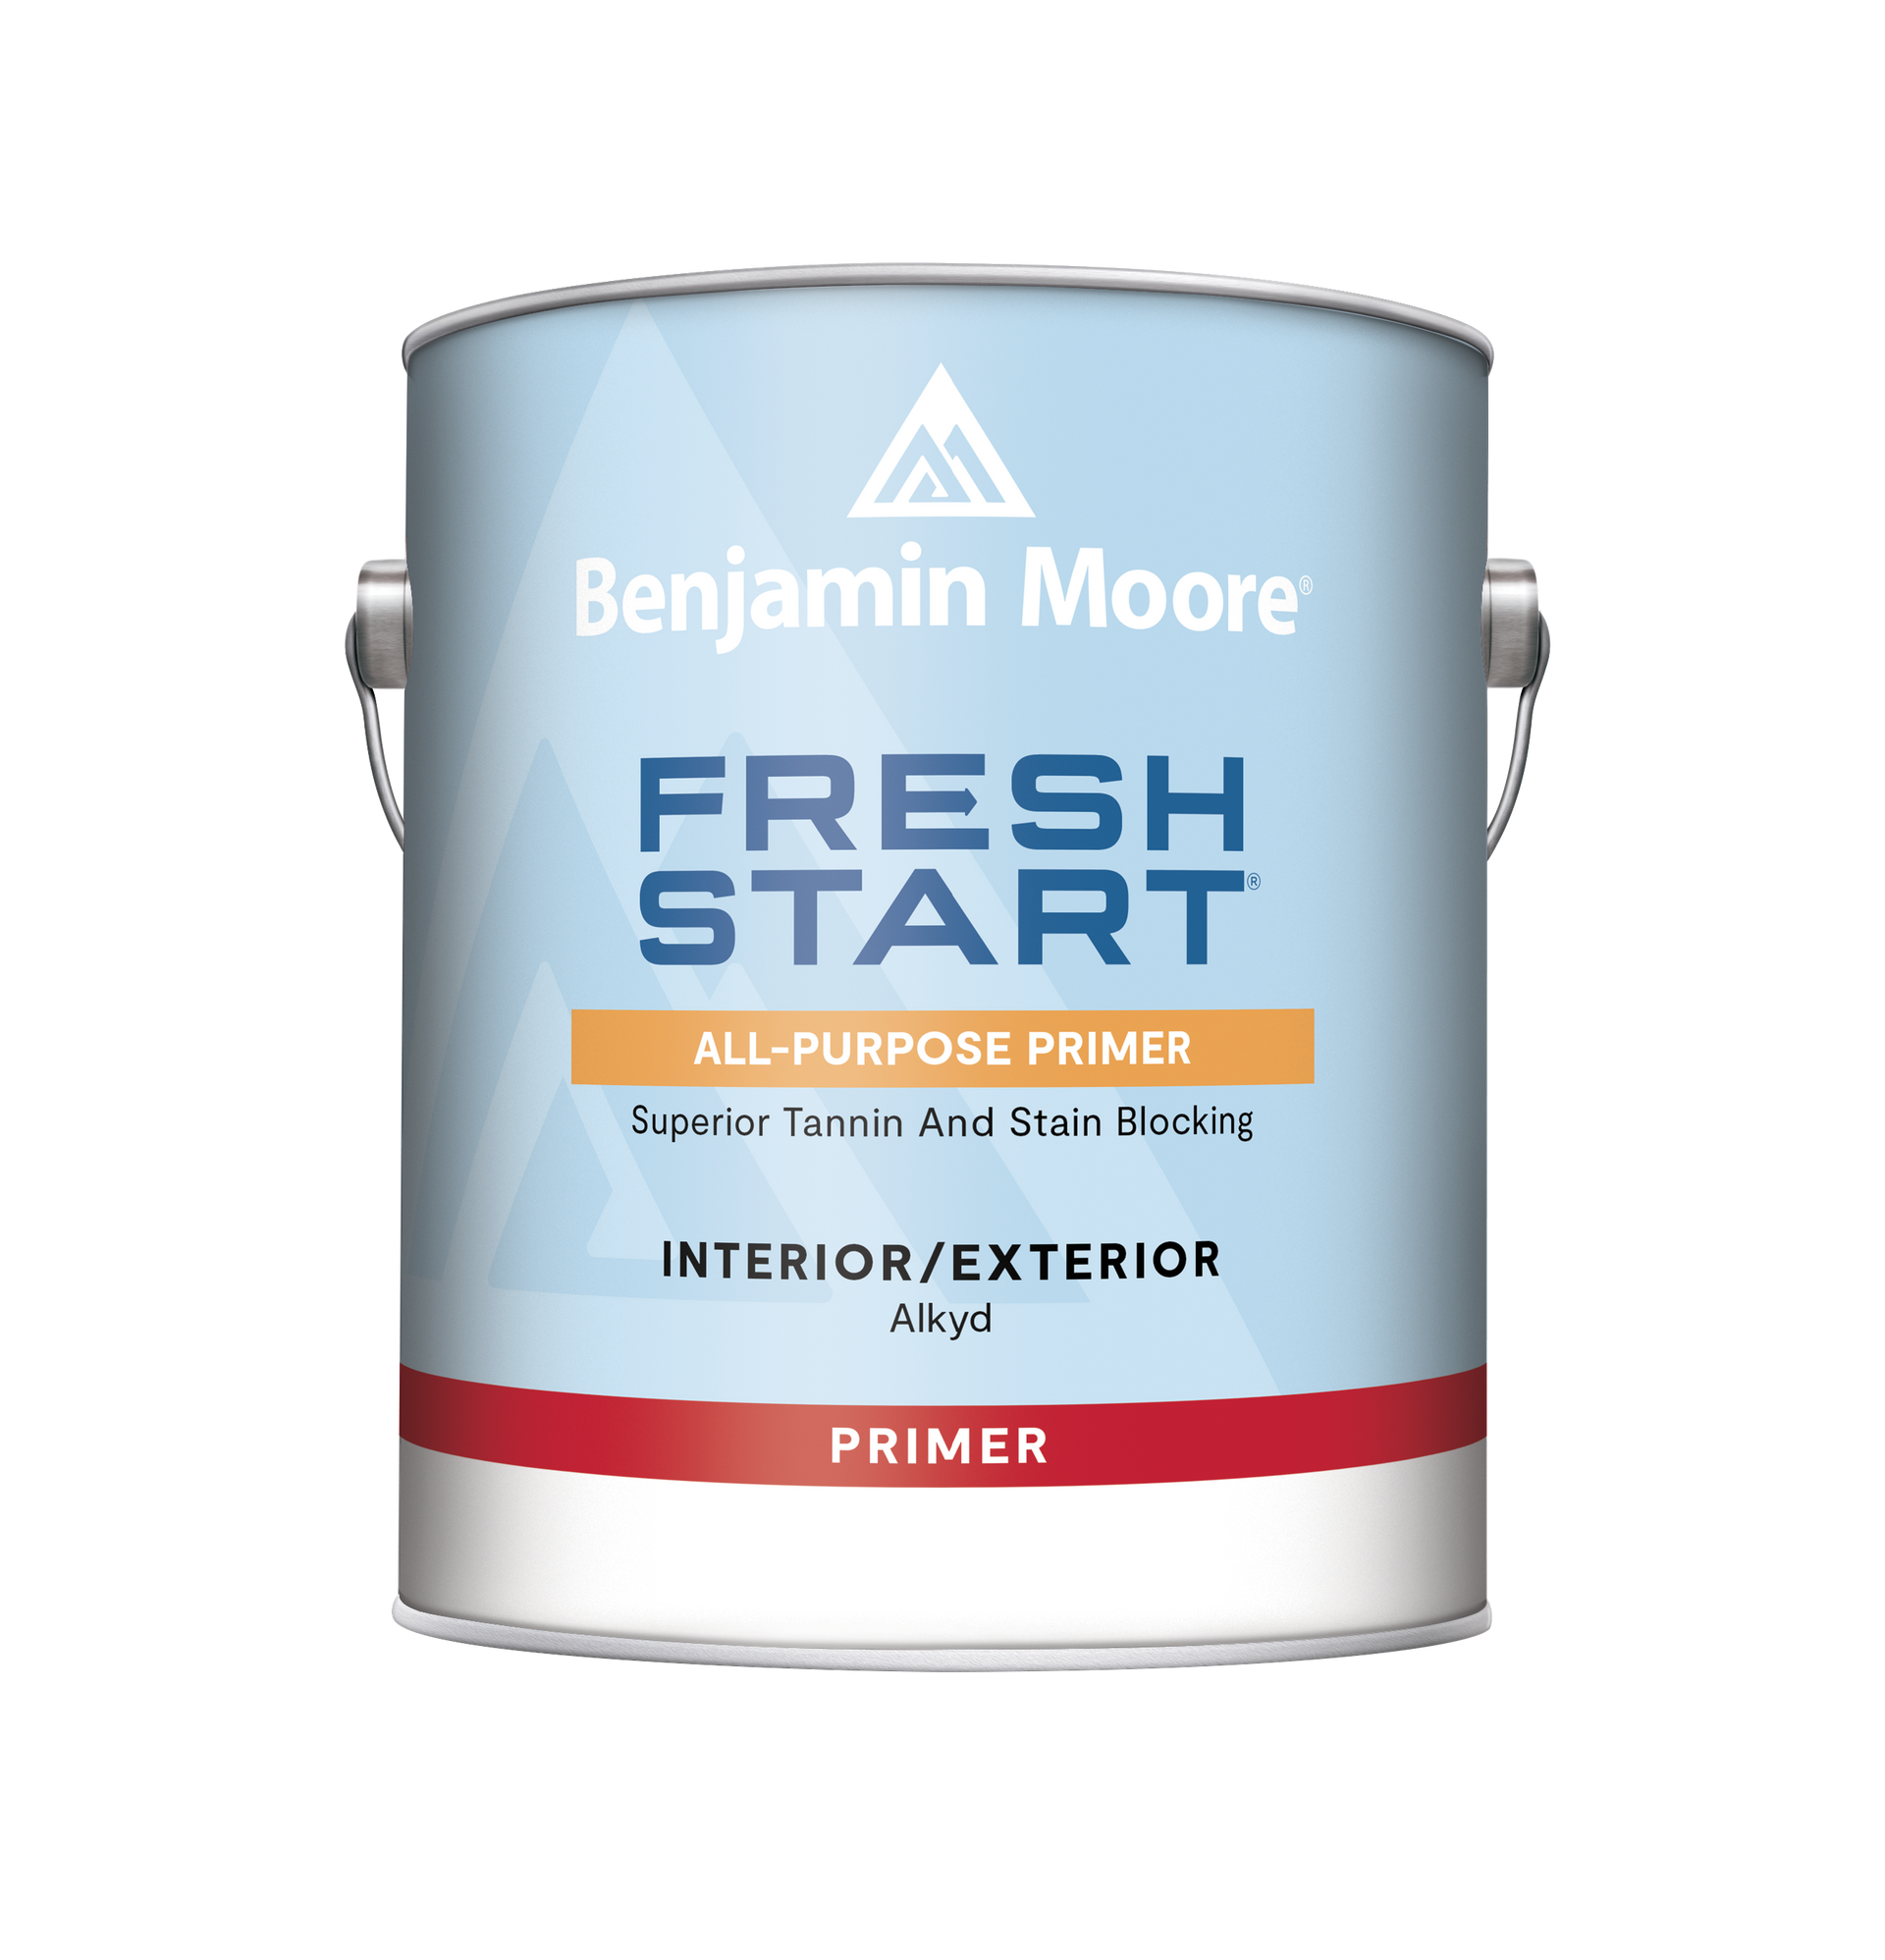 Fresh Start® All-Purpose Primer and Benjamin Moore® paint near me near Des Moines, Iowa (IA)